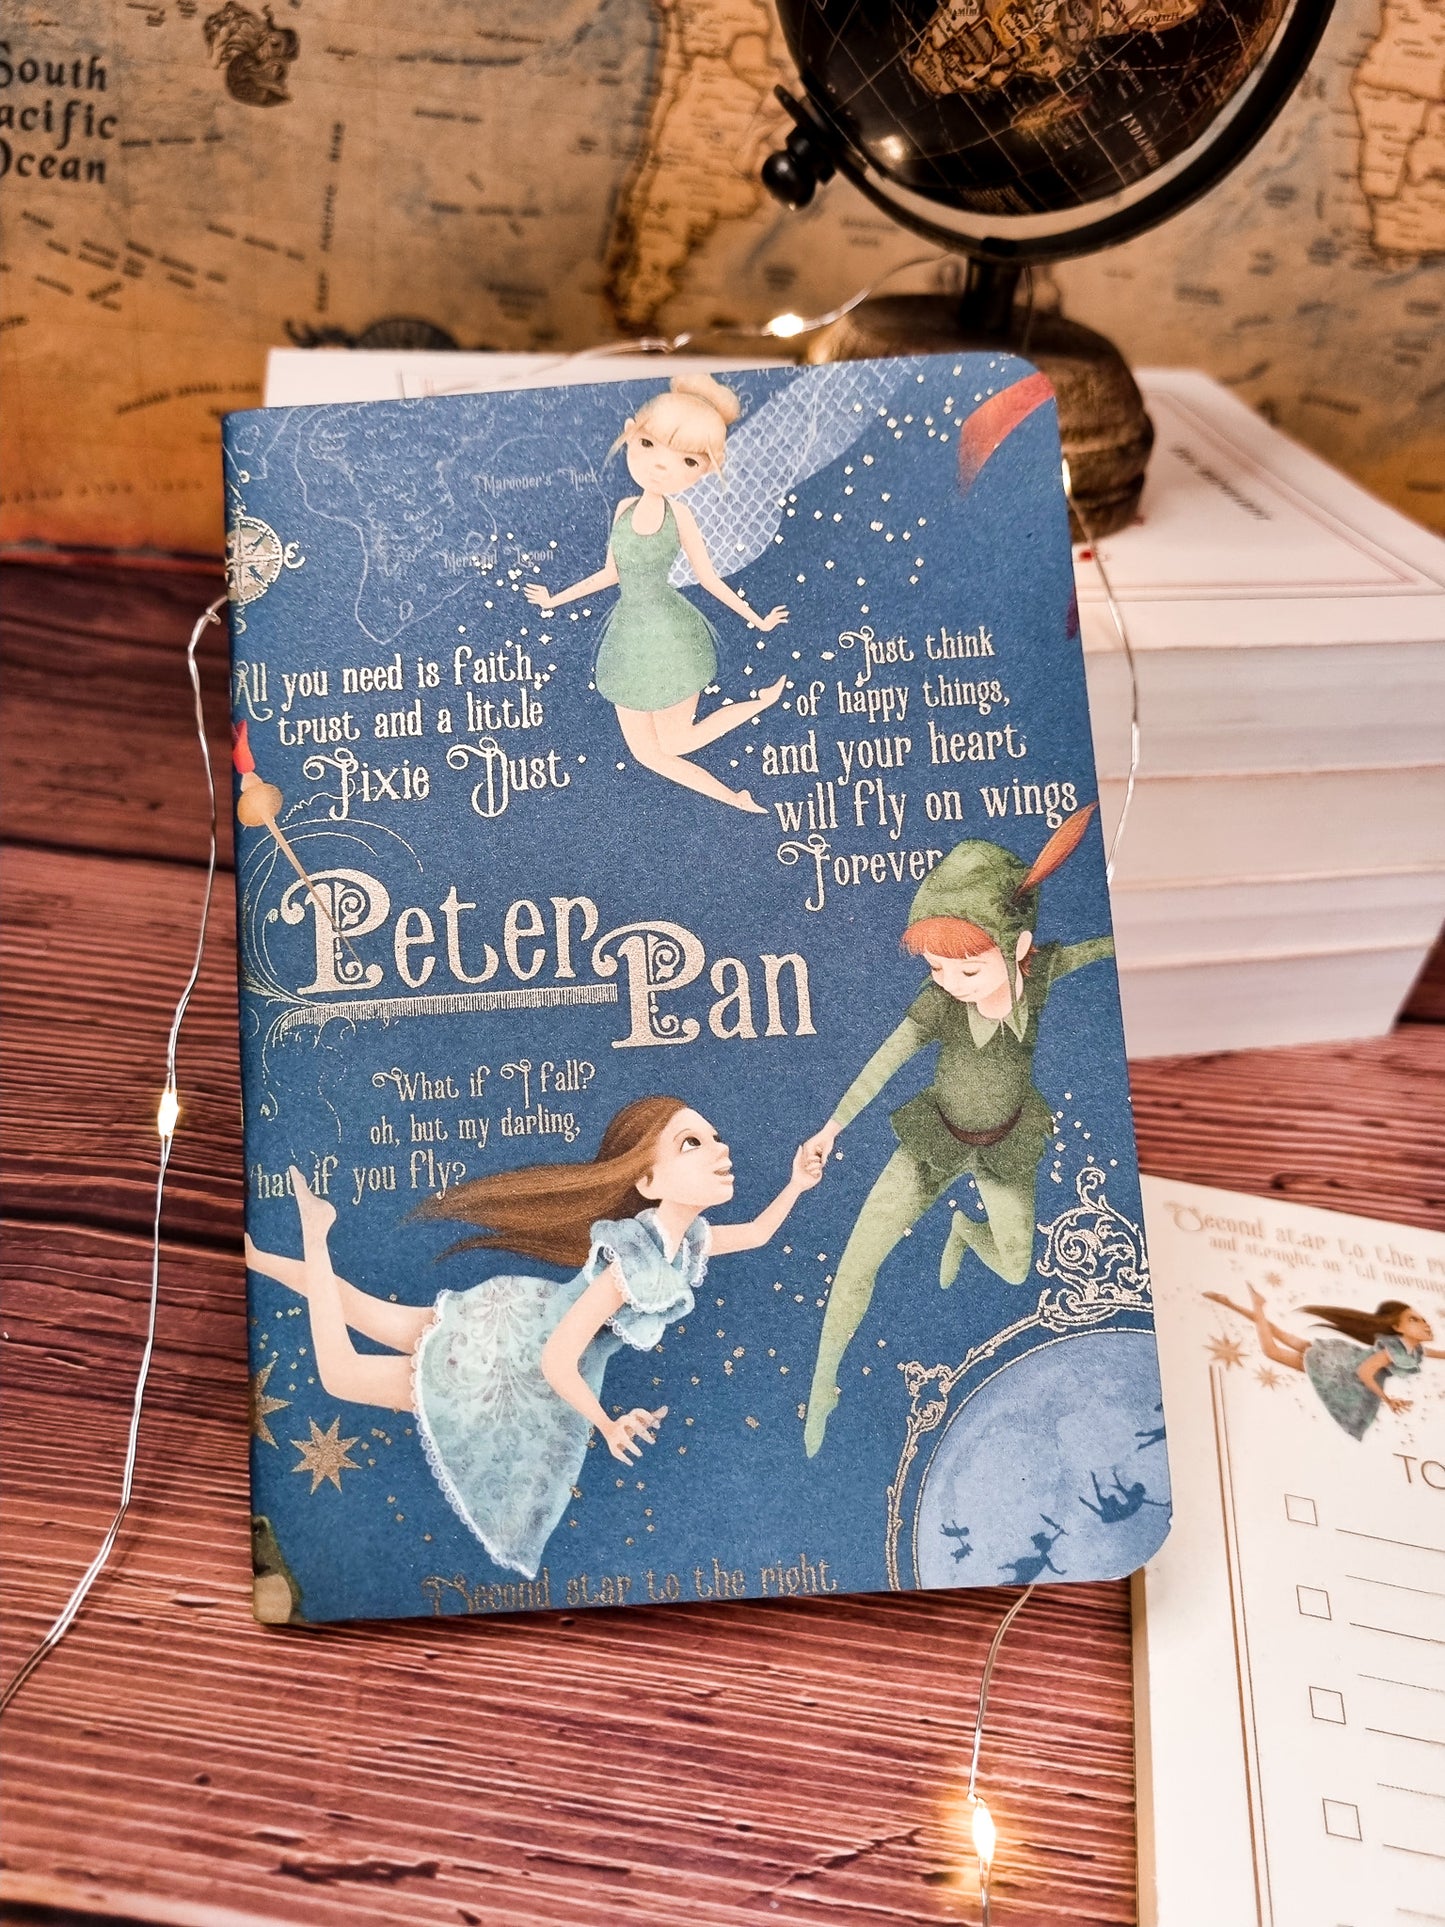 Set Peter Pan : Carnet A6 et Bloc To-Do List